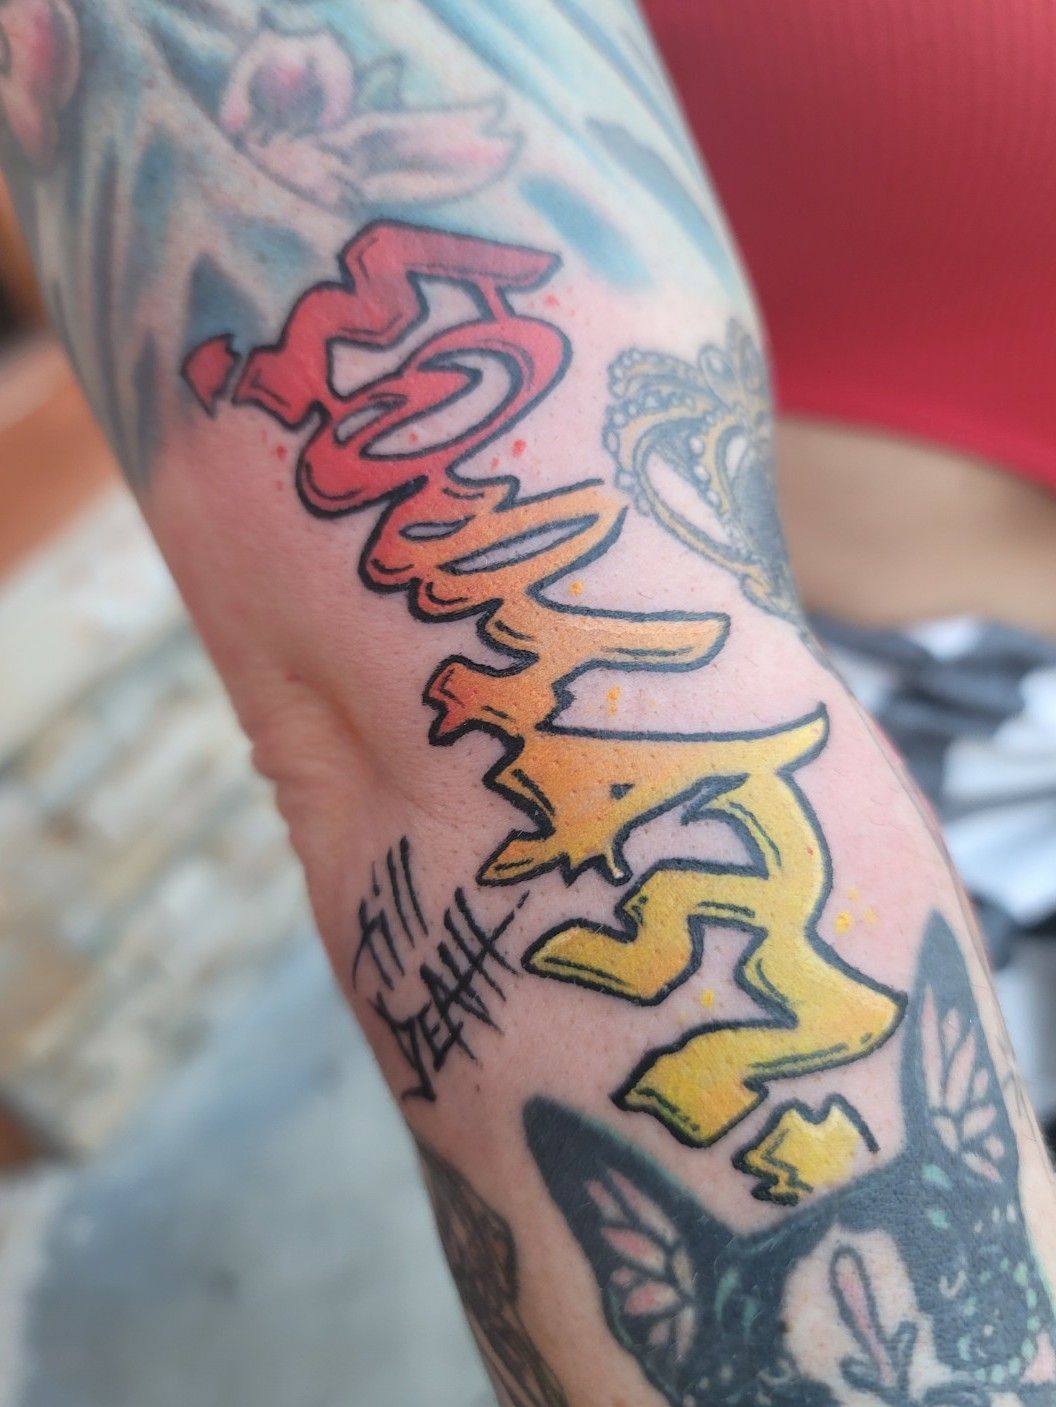 80 Graffiti Tattoos For Men  Inked Street Art Designs  Graffiti tattoo  Tattoos for guys Tattoos